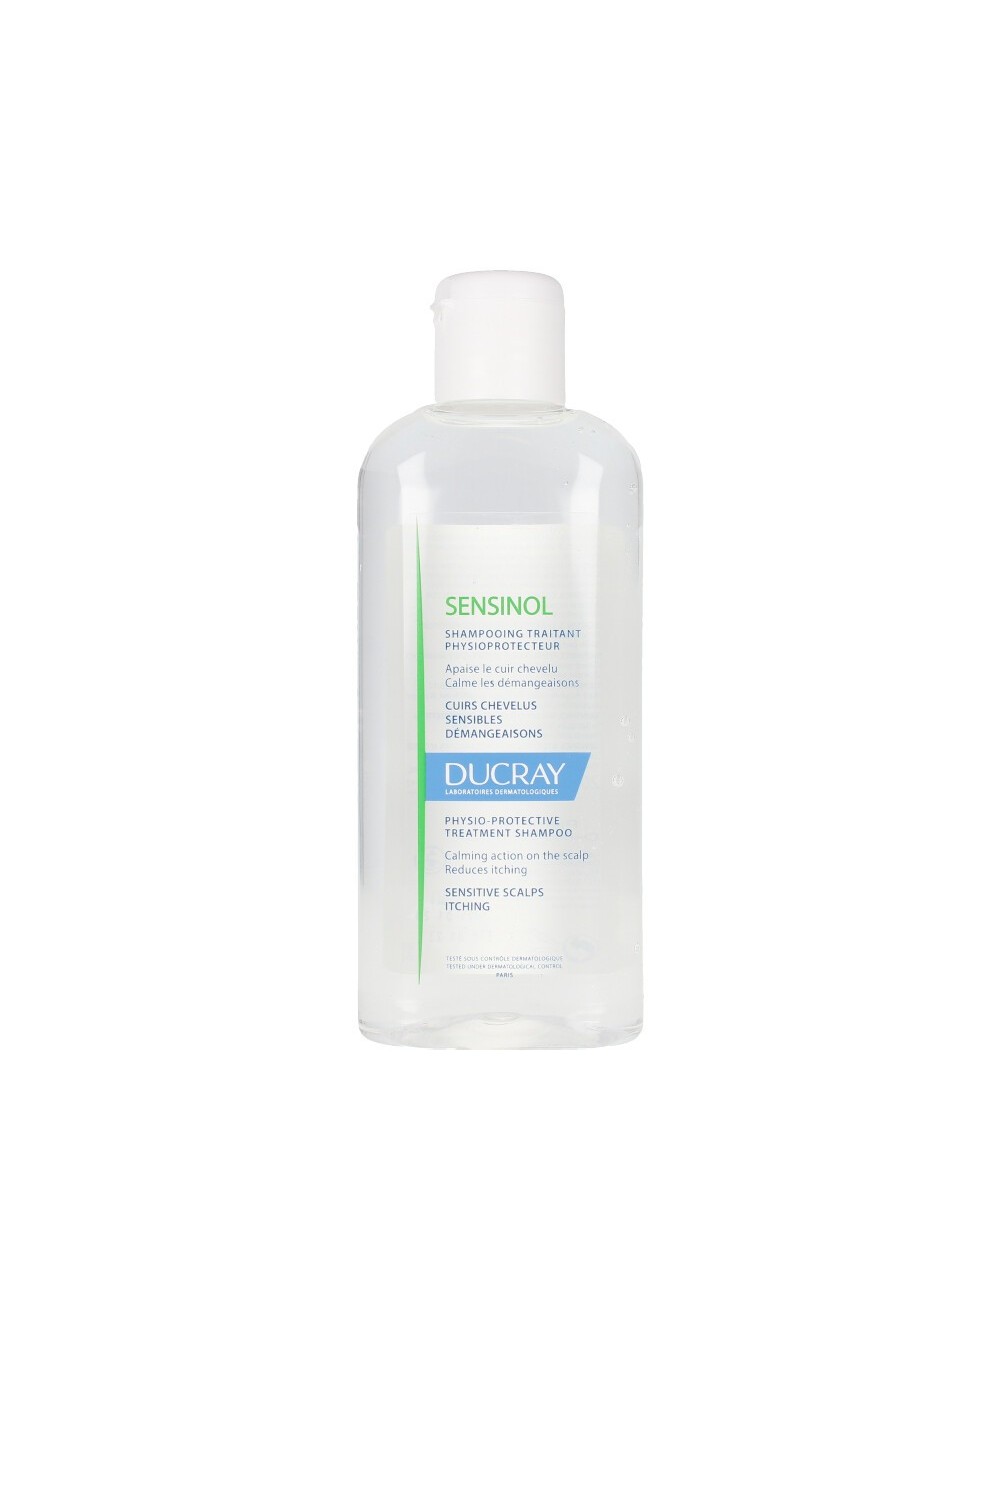 Ducray Sensinol Physio Protective Shampoo 200ml